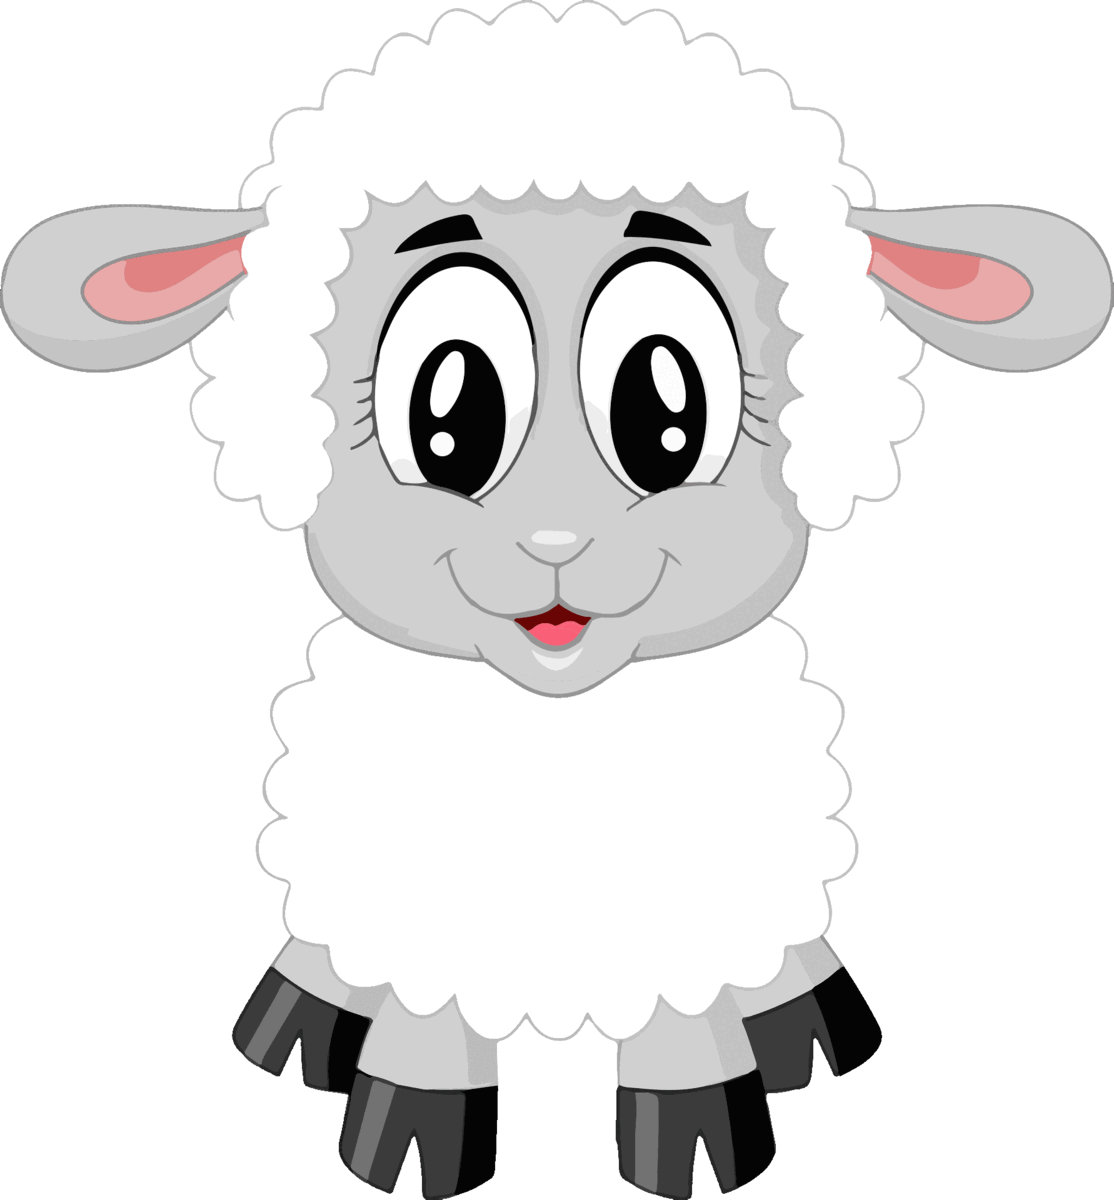 Sheep (Free Drop) - Sheep Farms | OpenSea